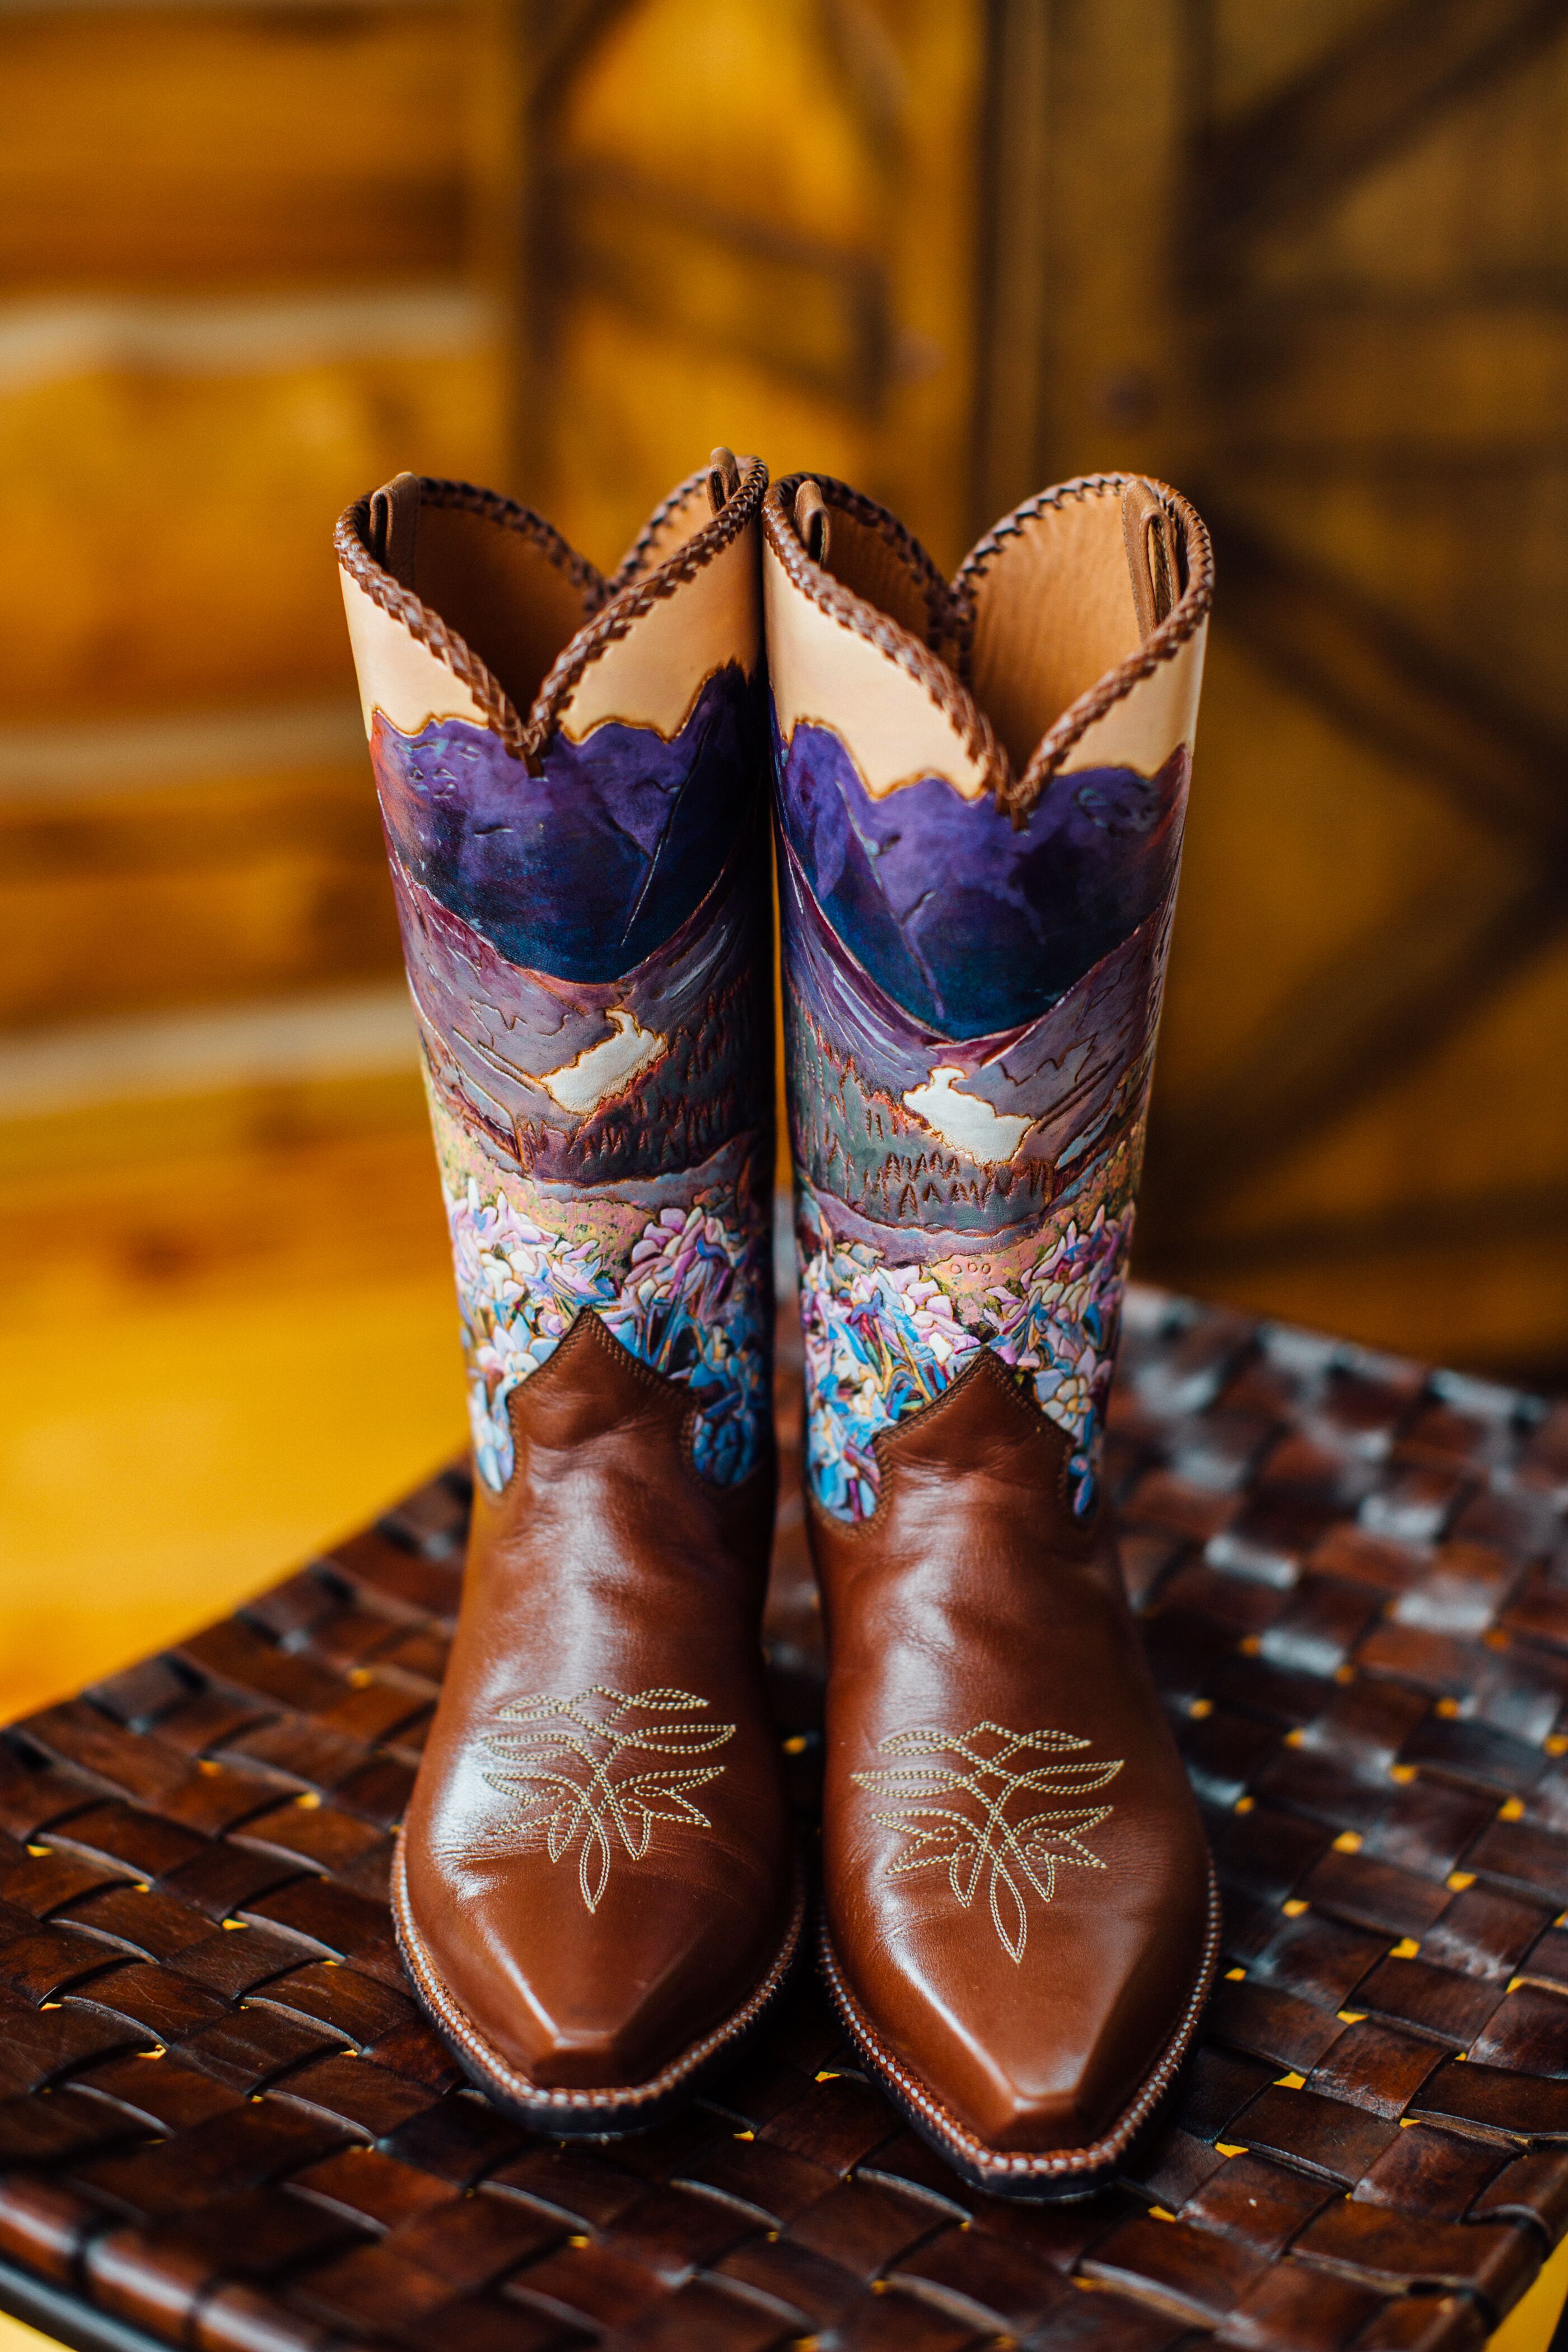 custom cowboy boots near me